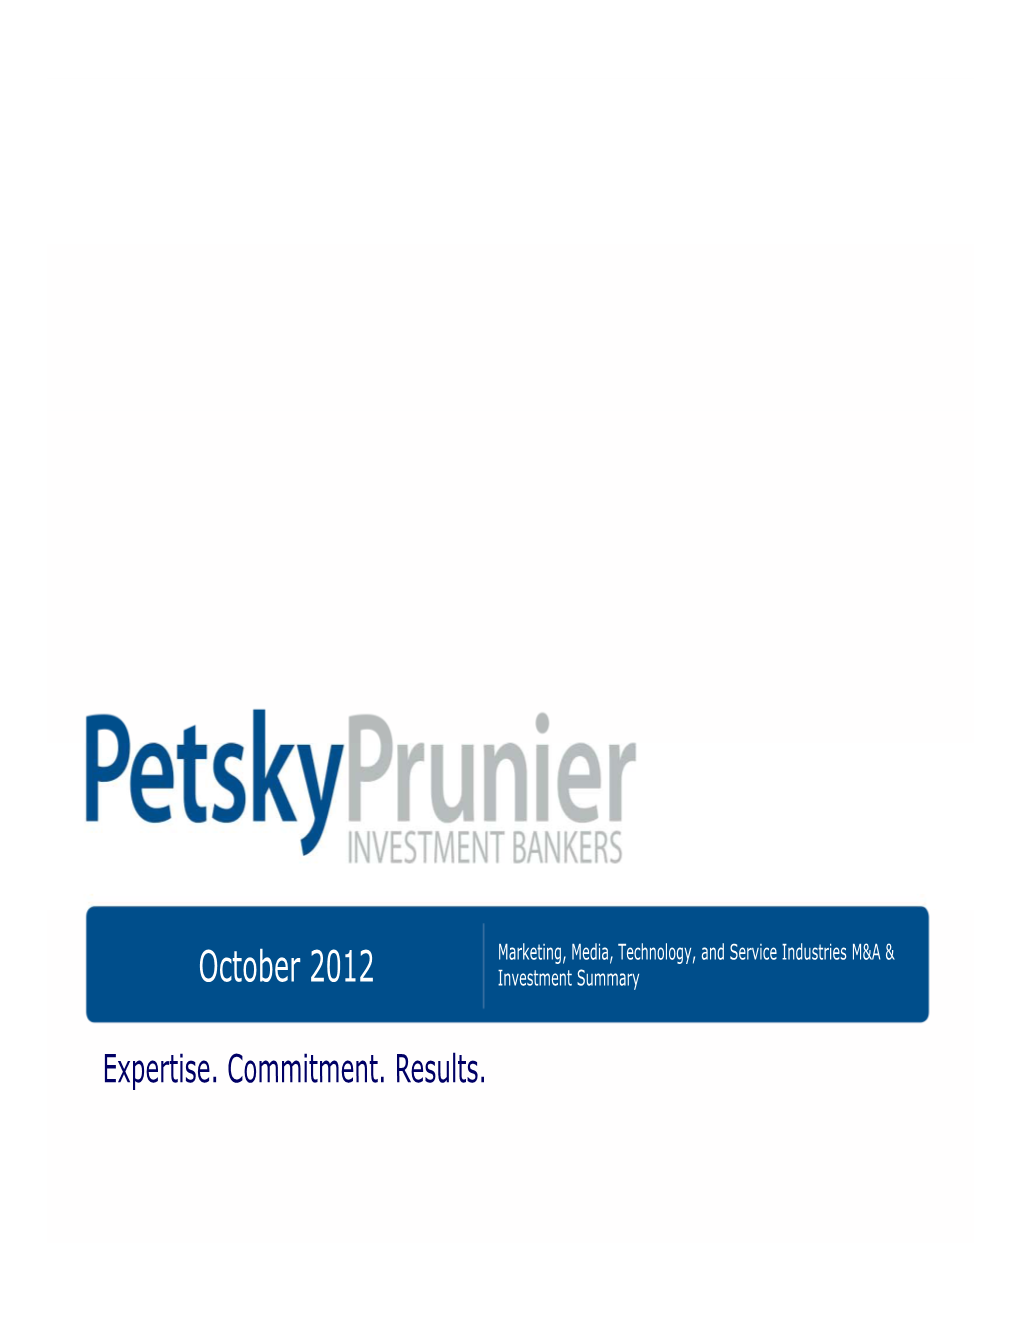 October 2012 Investment Summary